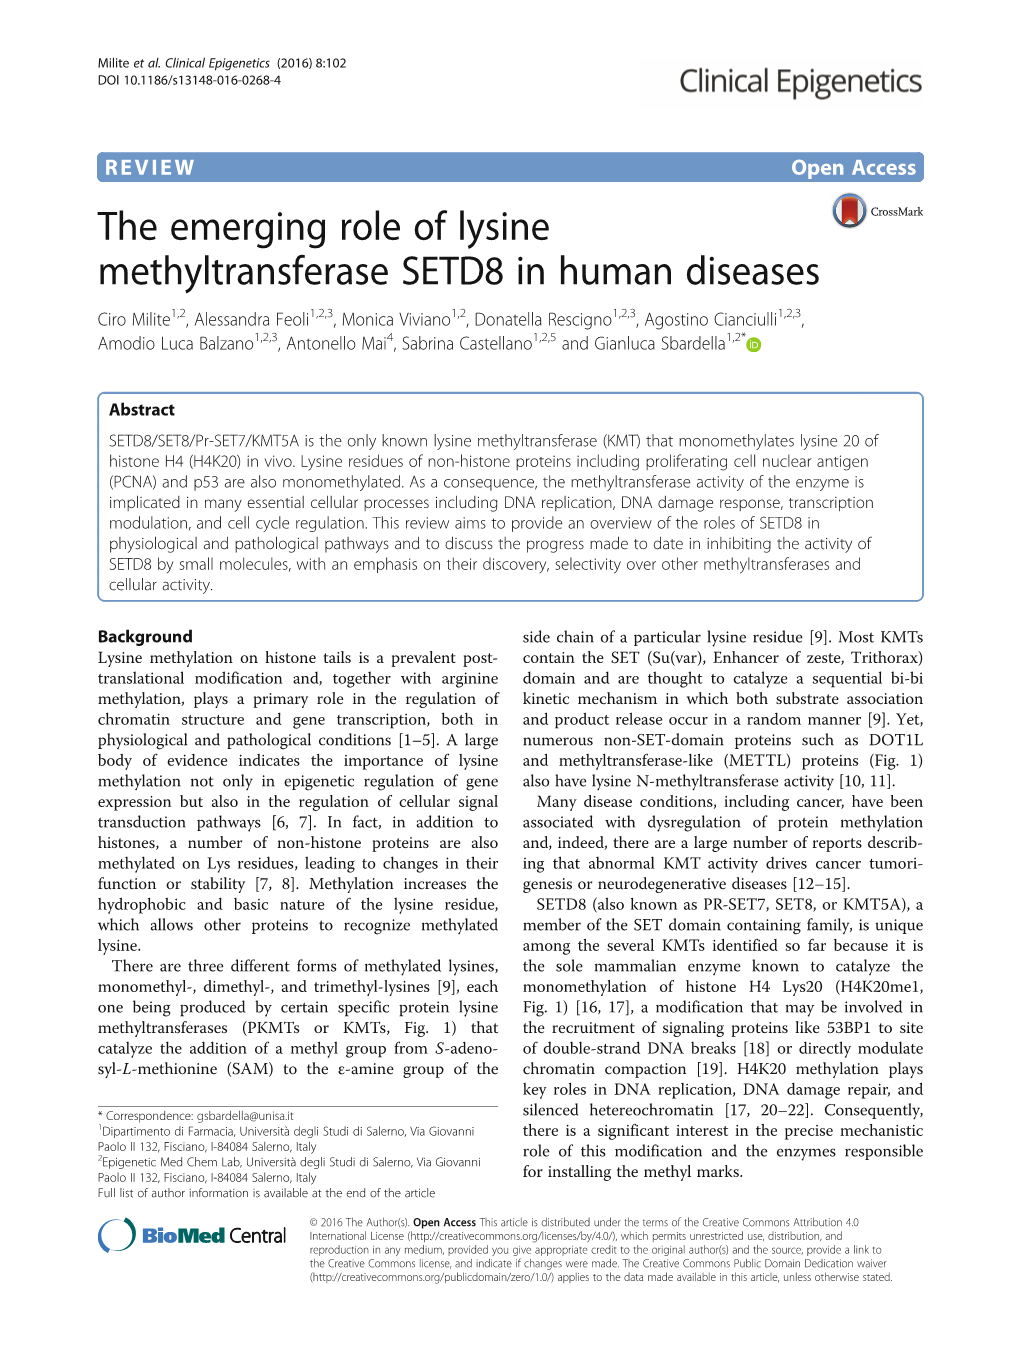 The Emerging Role of Lysine Methyltransferase SETD8 in Human